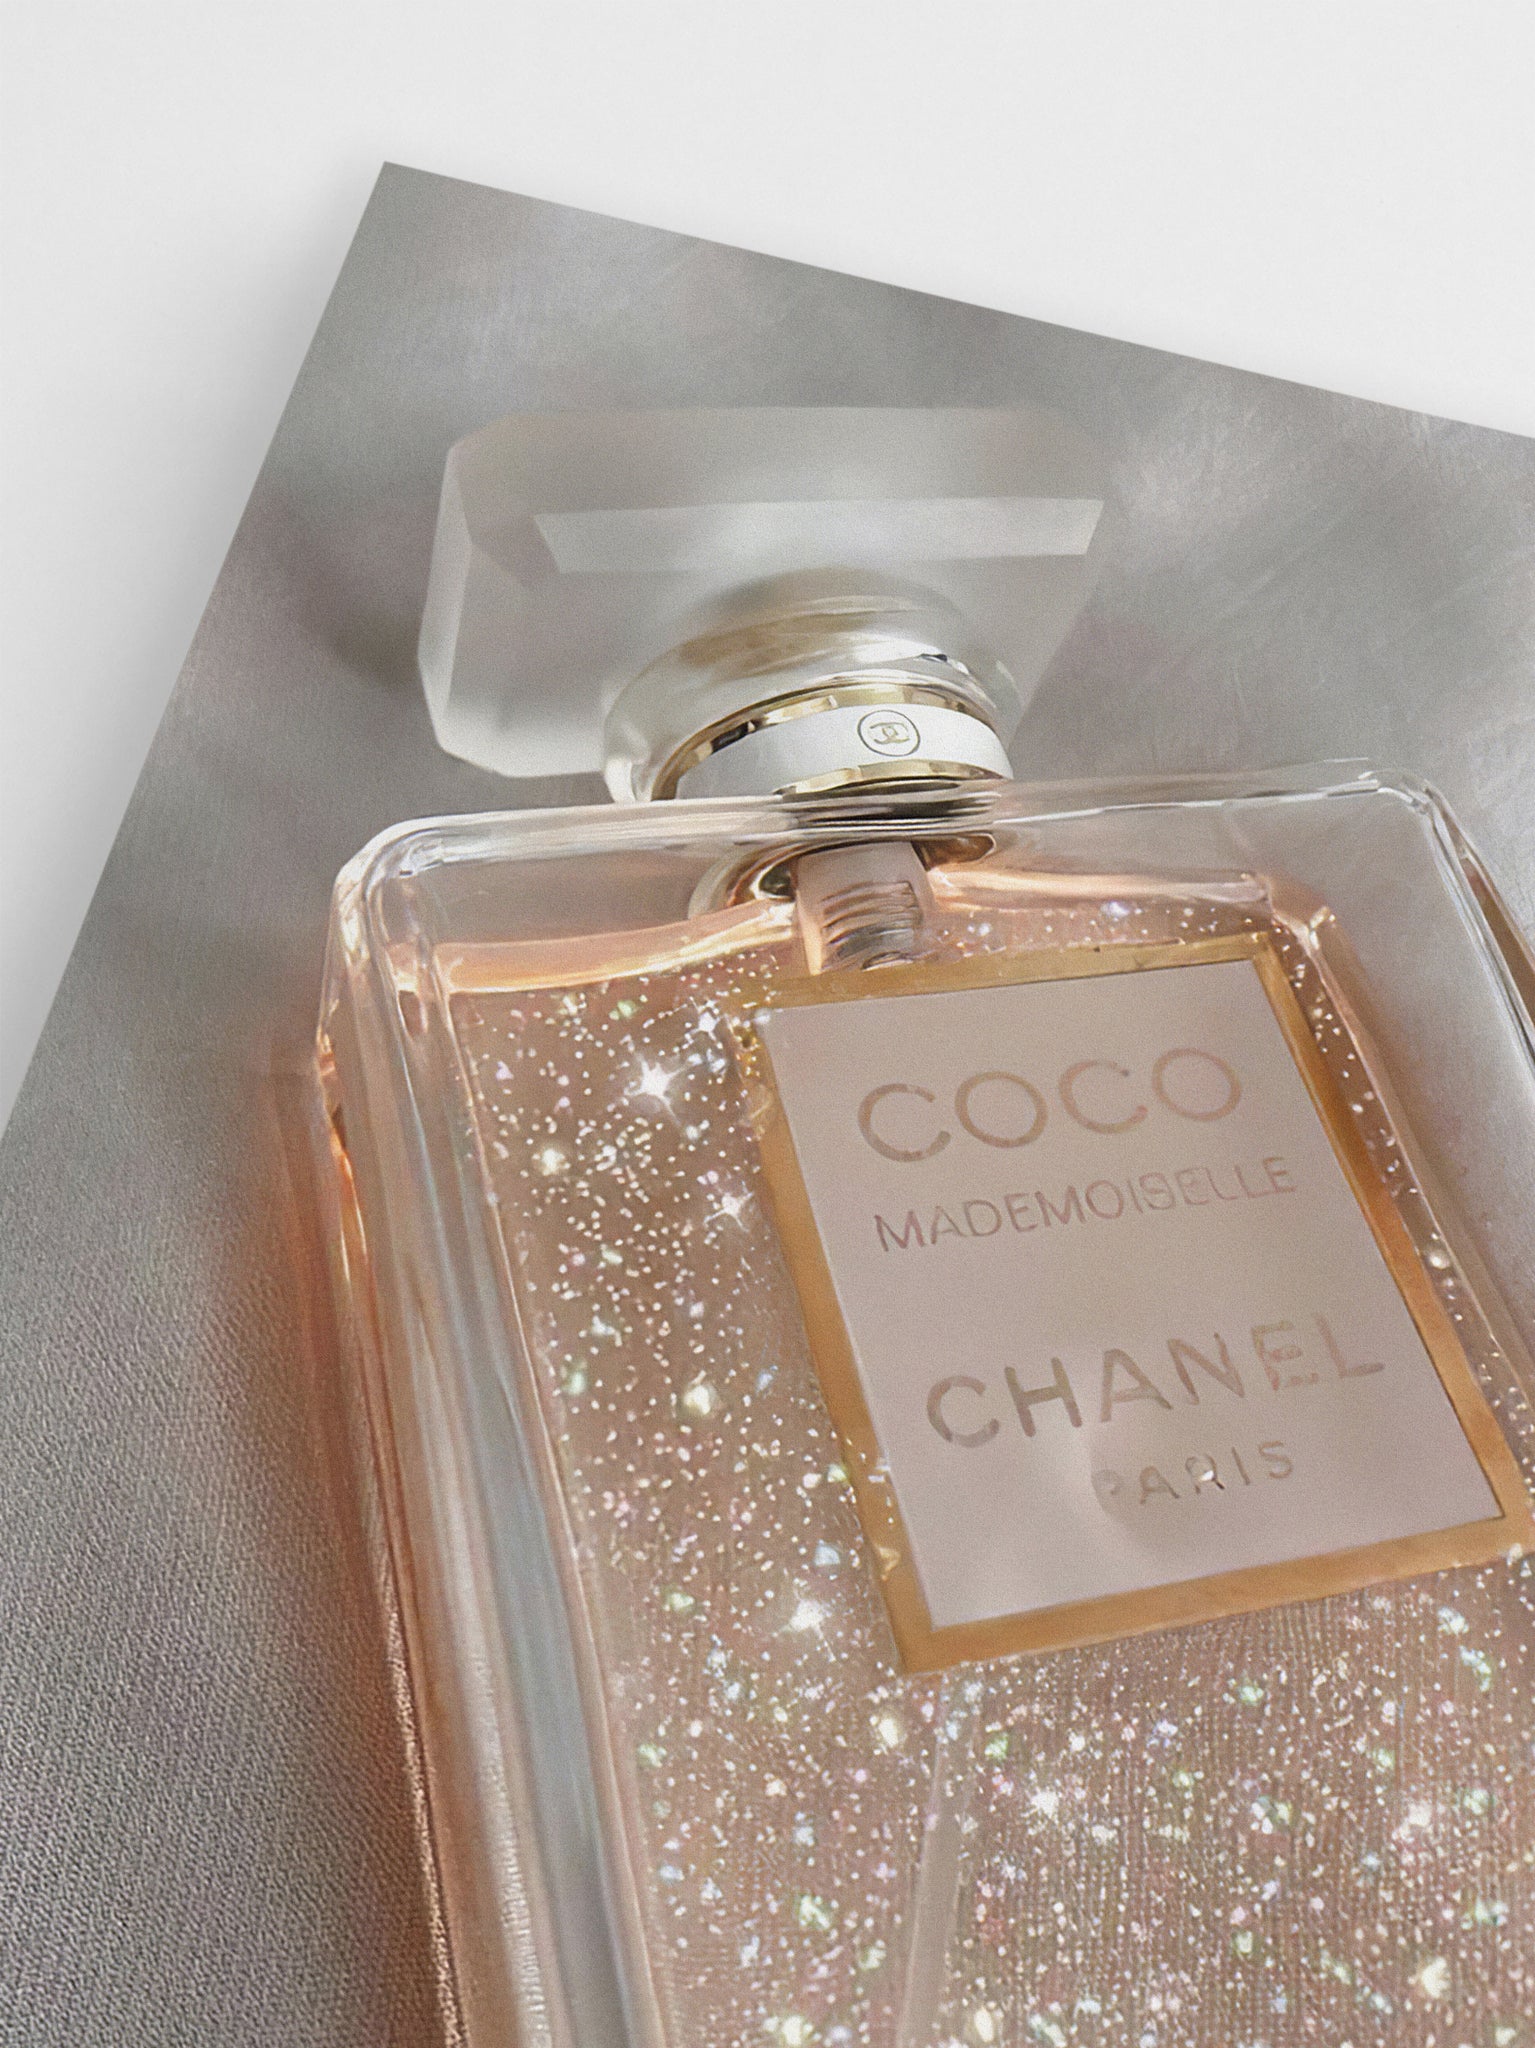 Coco Chanel Perfume wall art